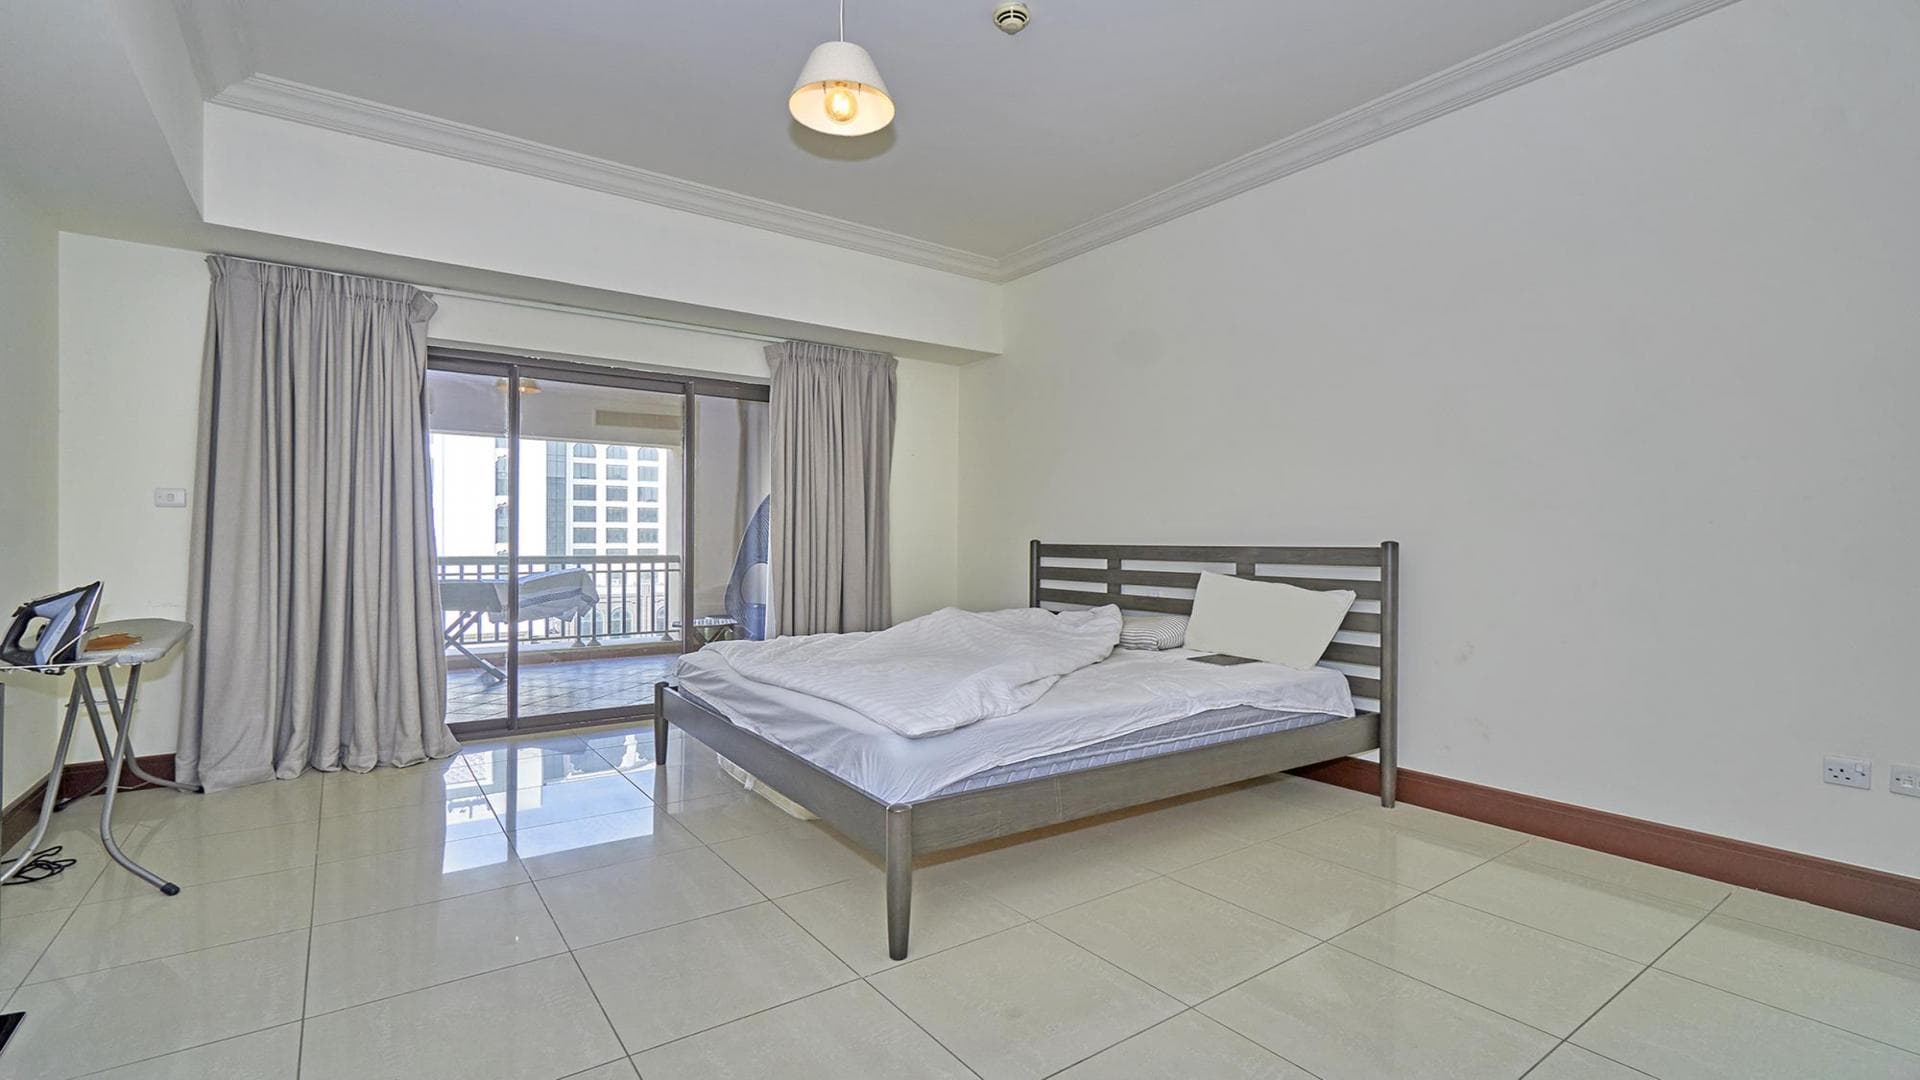 1 Bedroom Apartment For Sale Boulevard Plaza 1 Lp37034 Fe904c11f630380.jpg